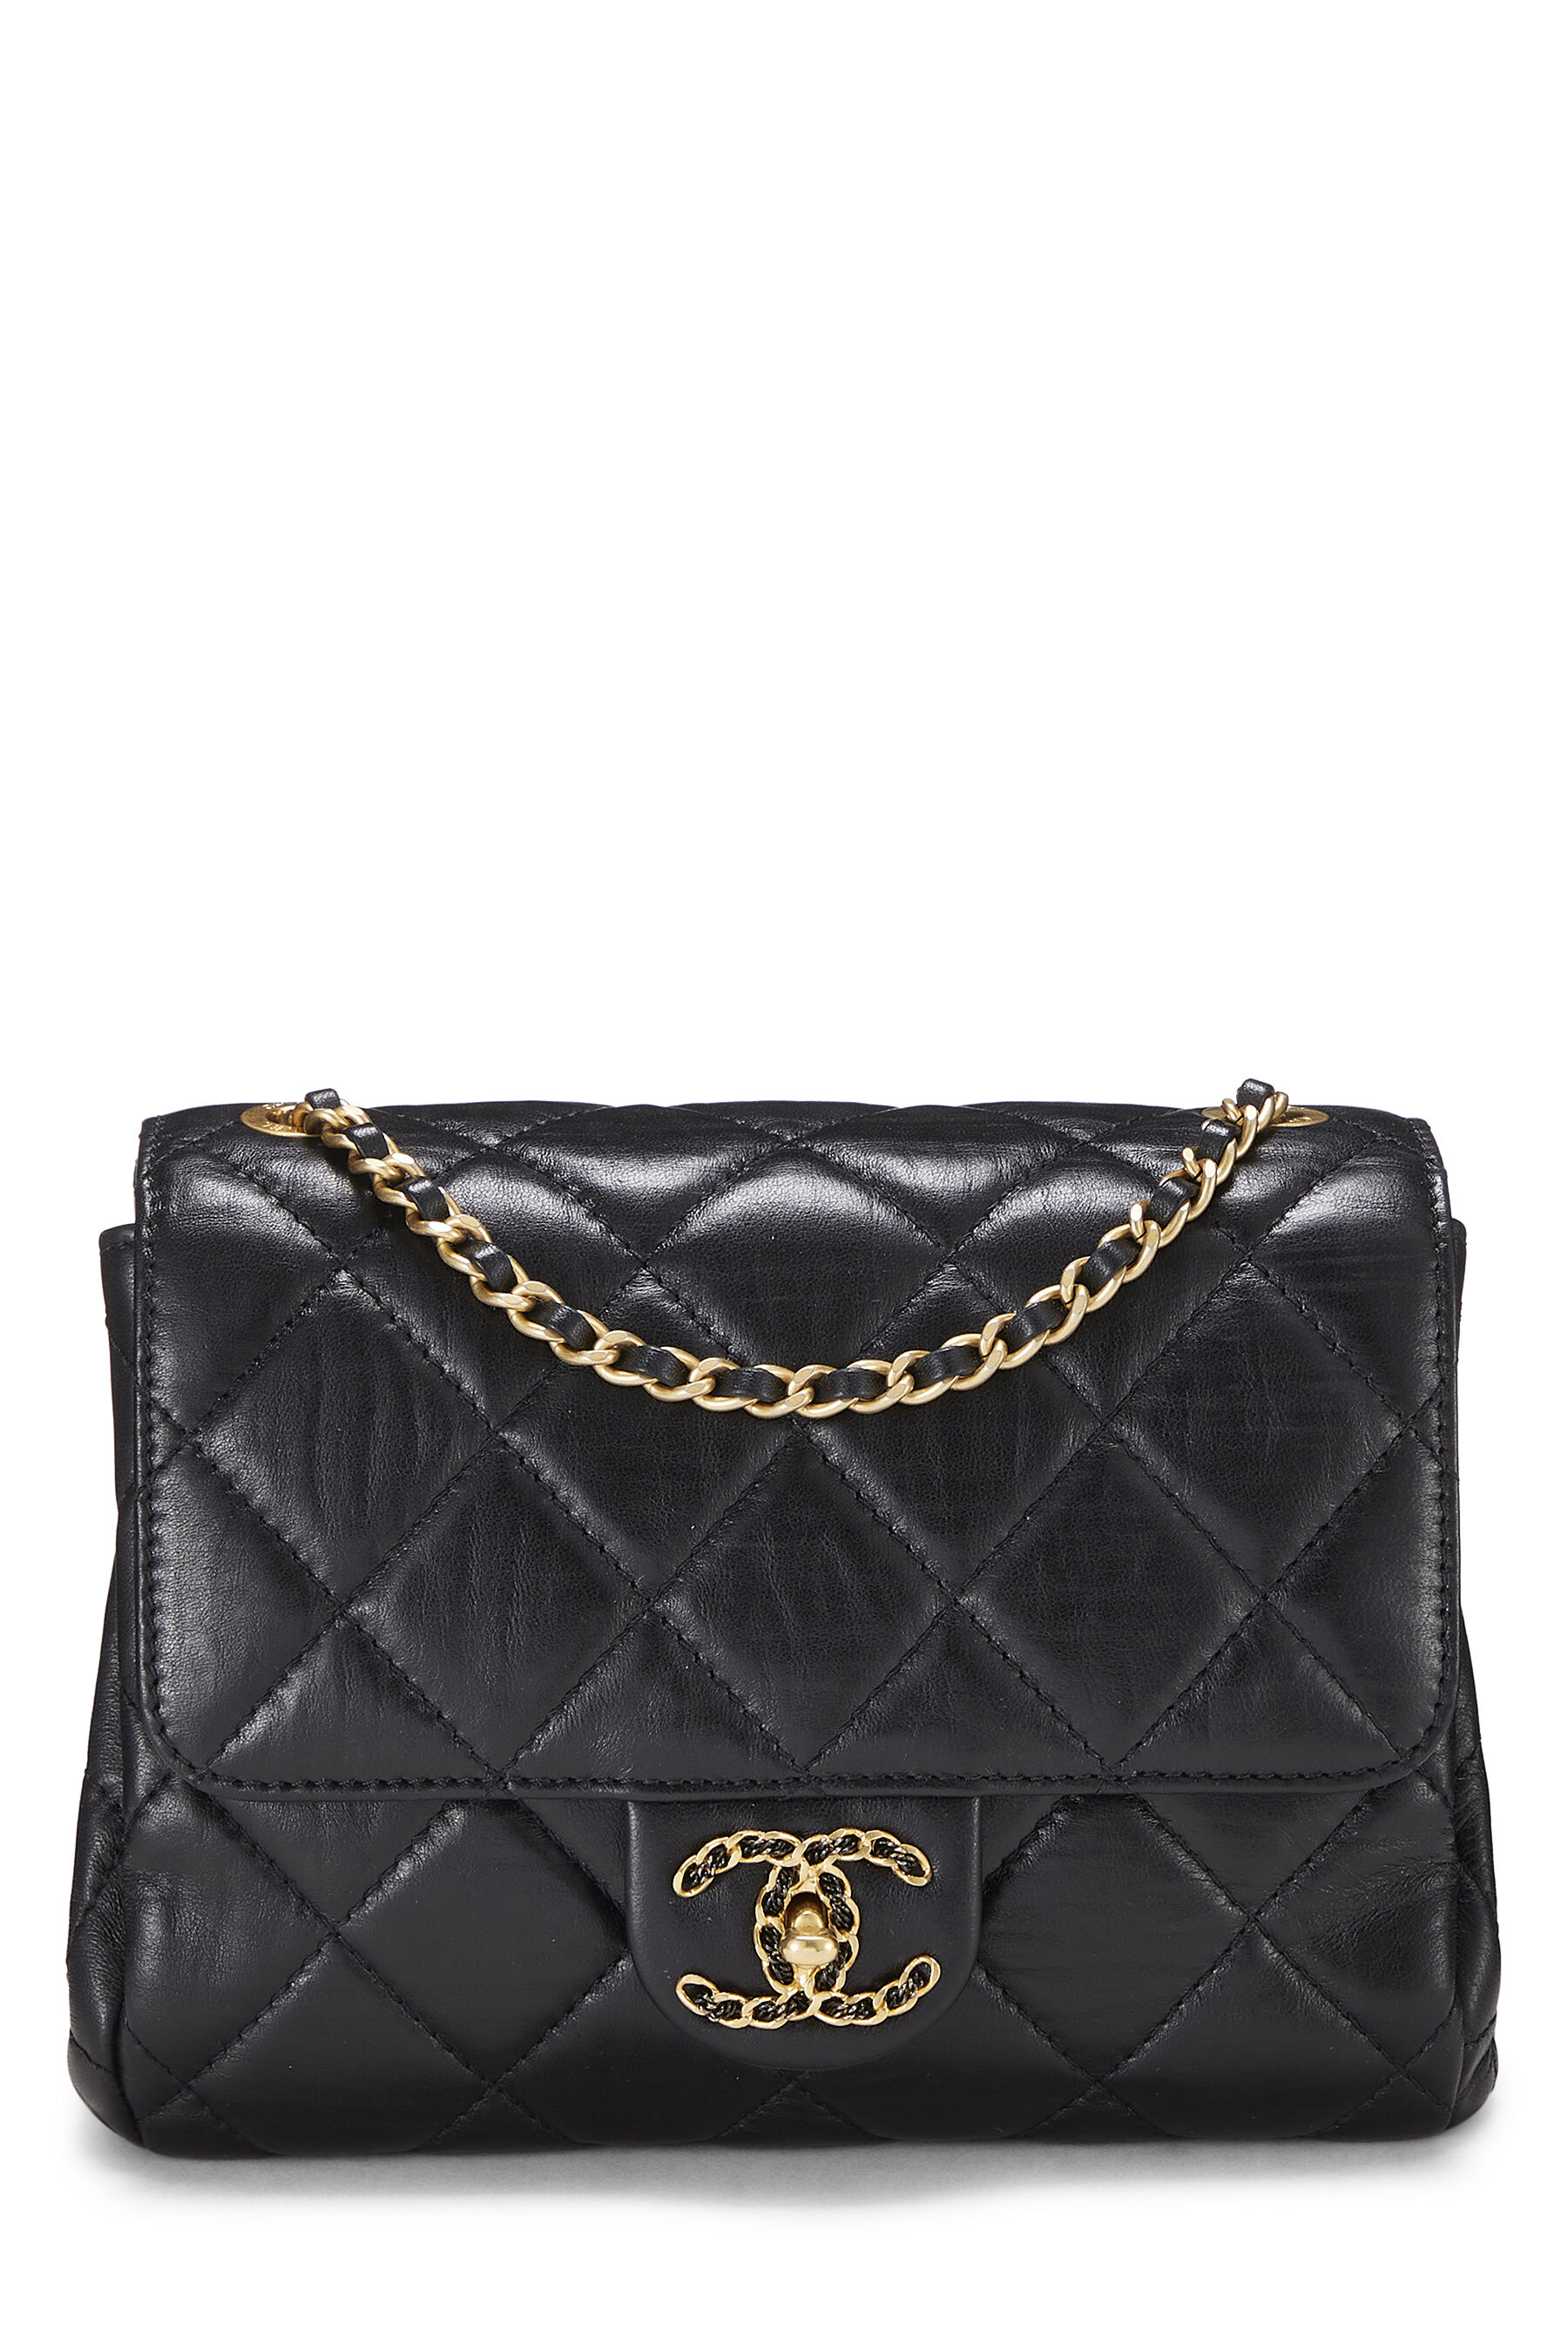 Chanel Mini Flap Bag, Chanel Double Flap Bag